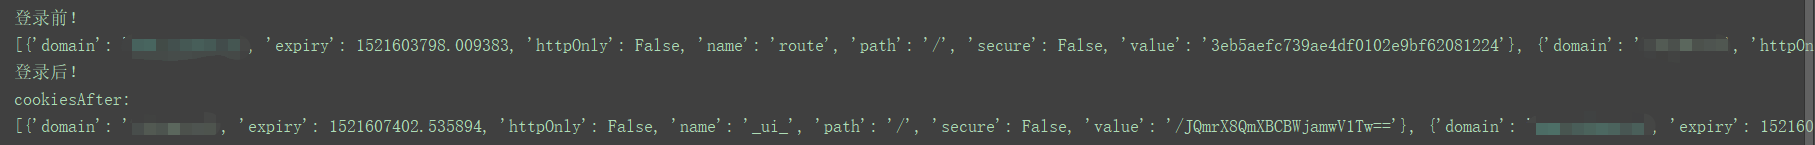 Python Selenium Cookie 绕过验证码实现登录示例代码